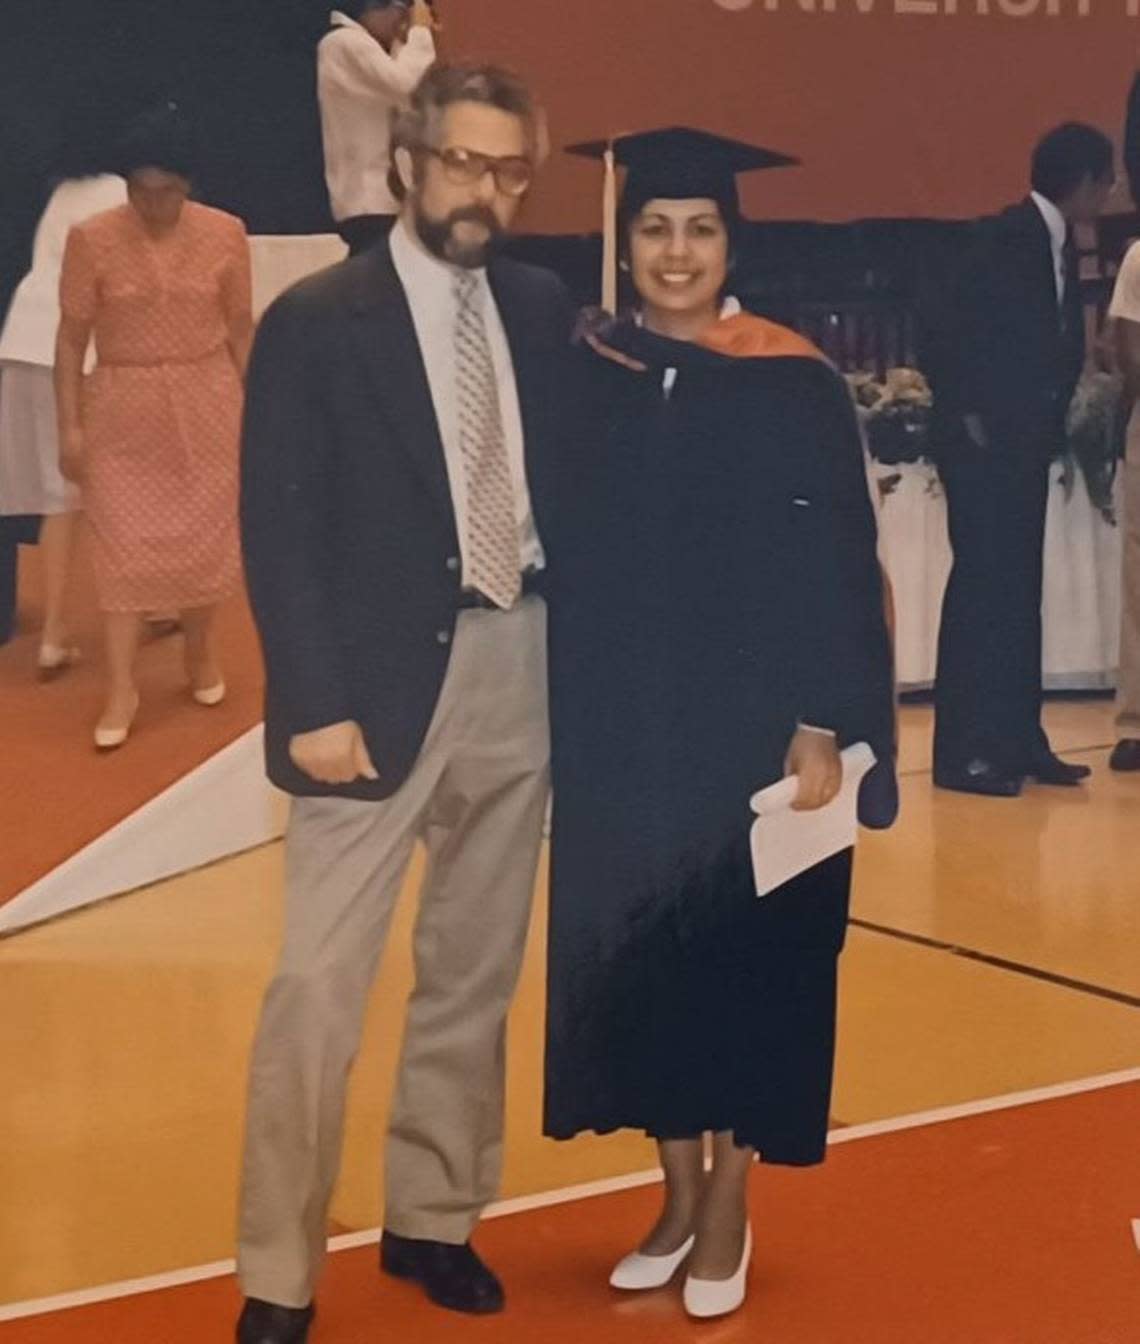 Rita Utt and Mike Utt at Rita’s graduation from the University of Houston law school in 1986.